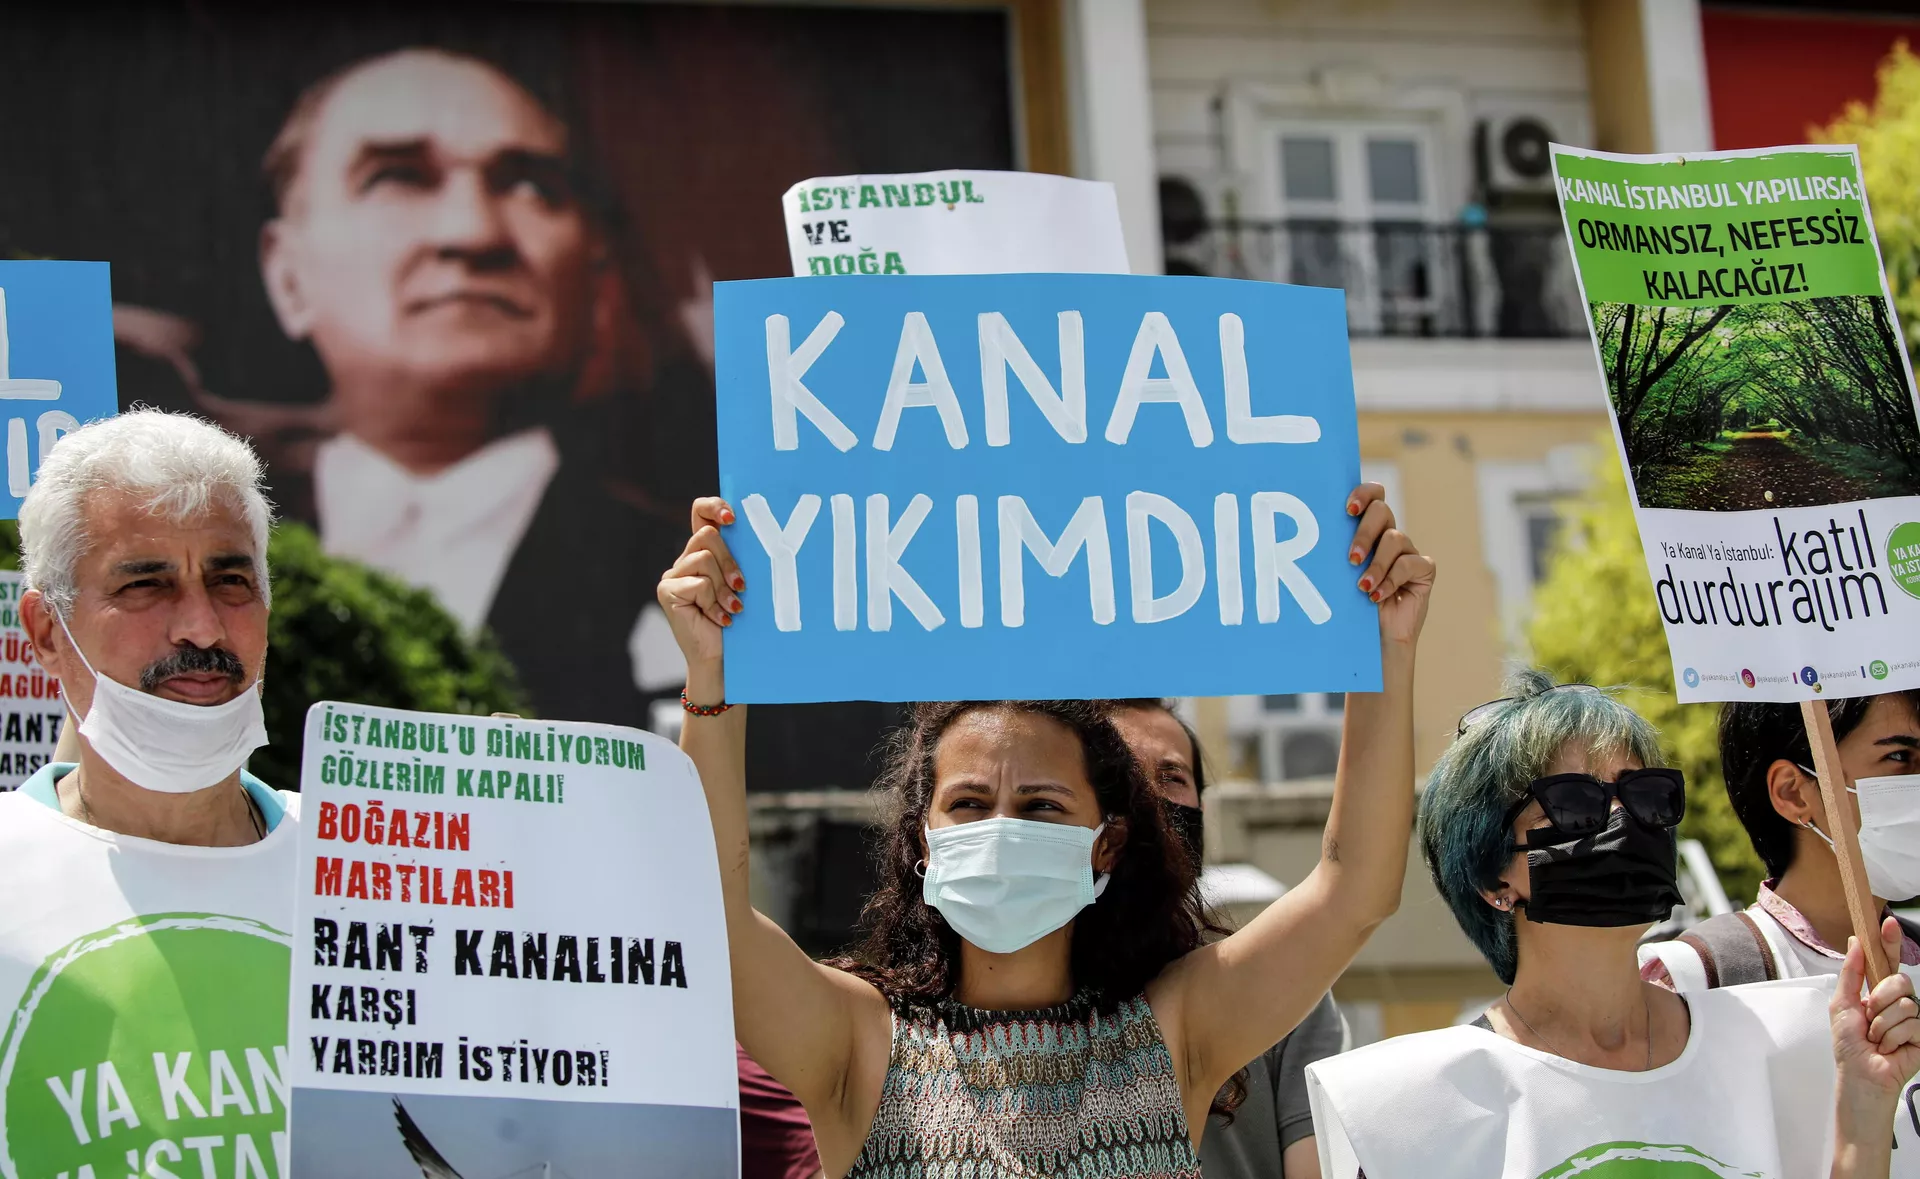 Участники акции протеста против строительства канала "Стамбул"